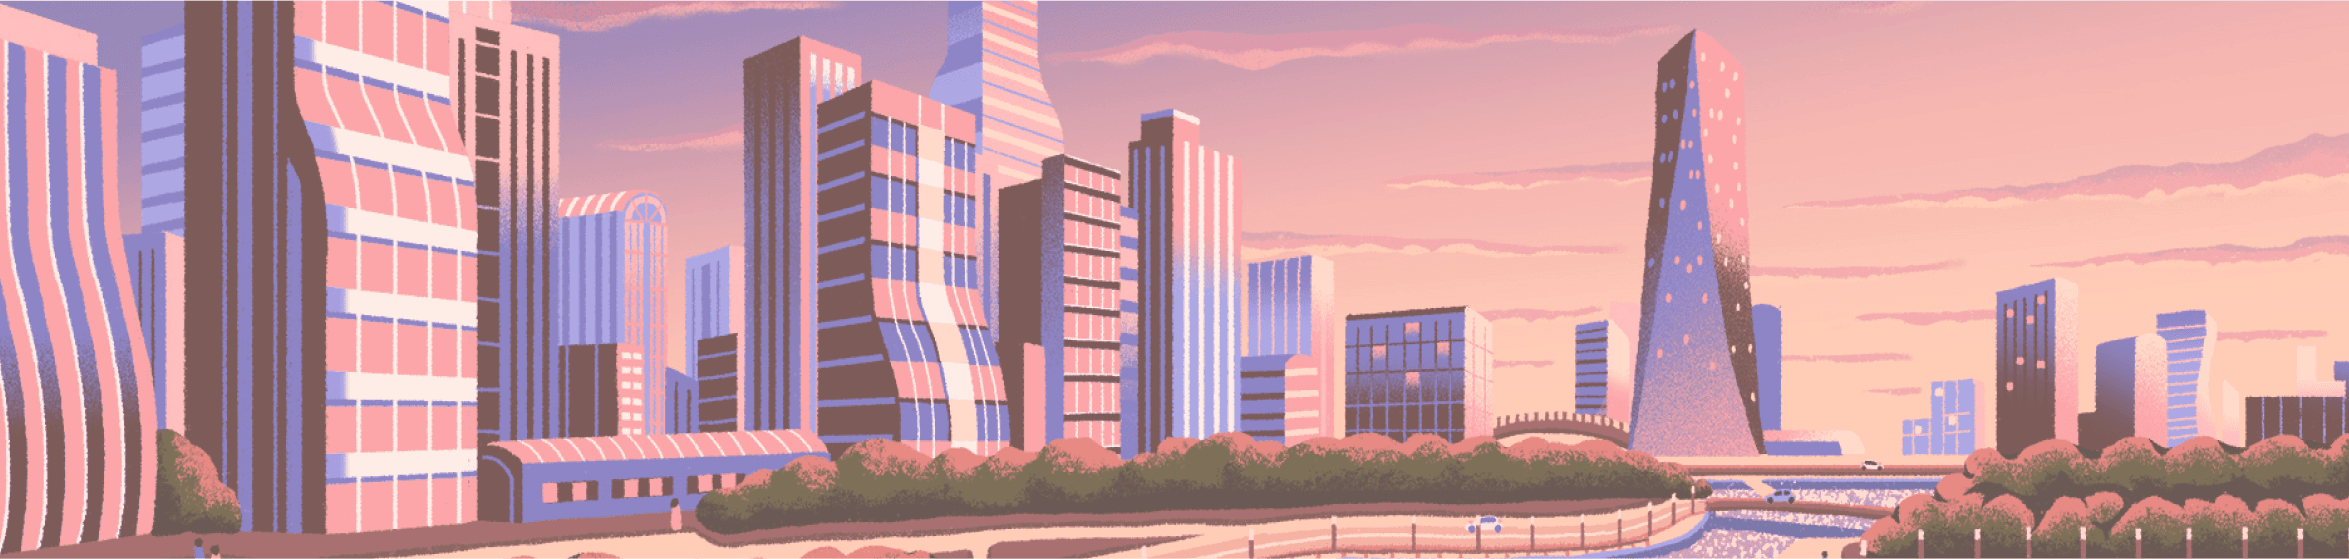 a city landscape